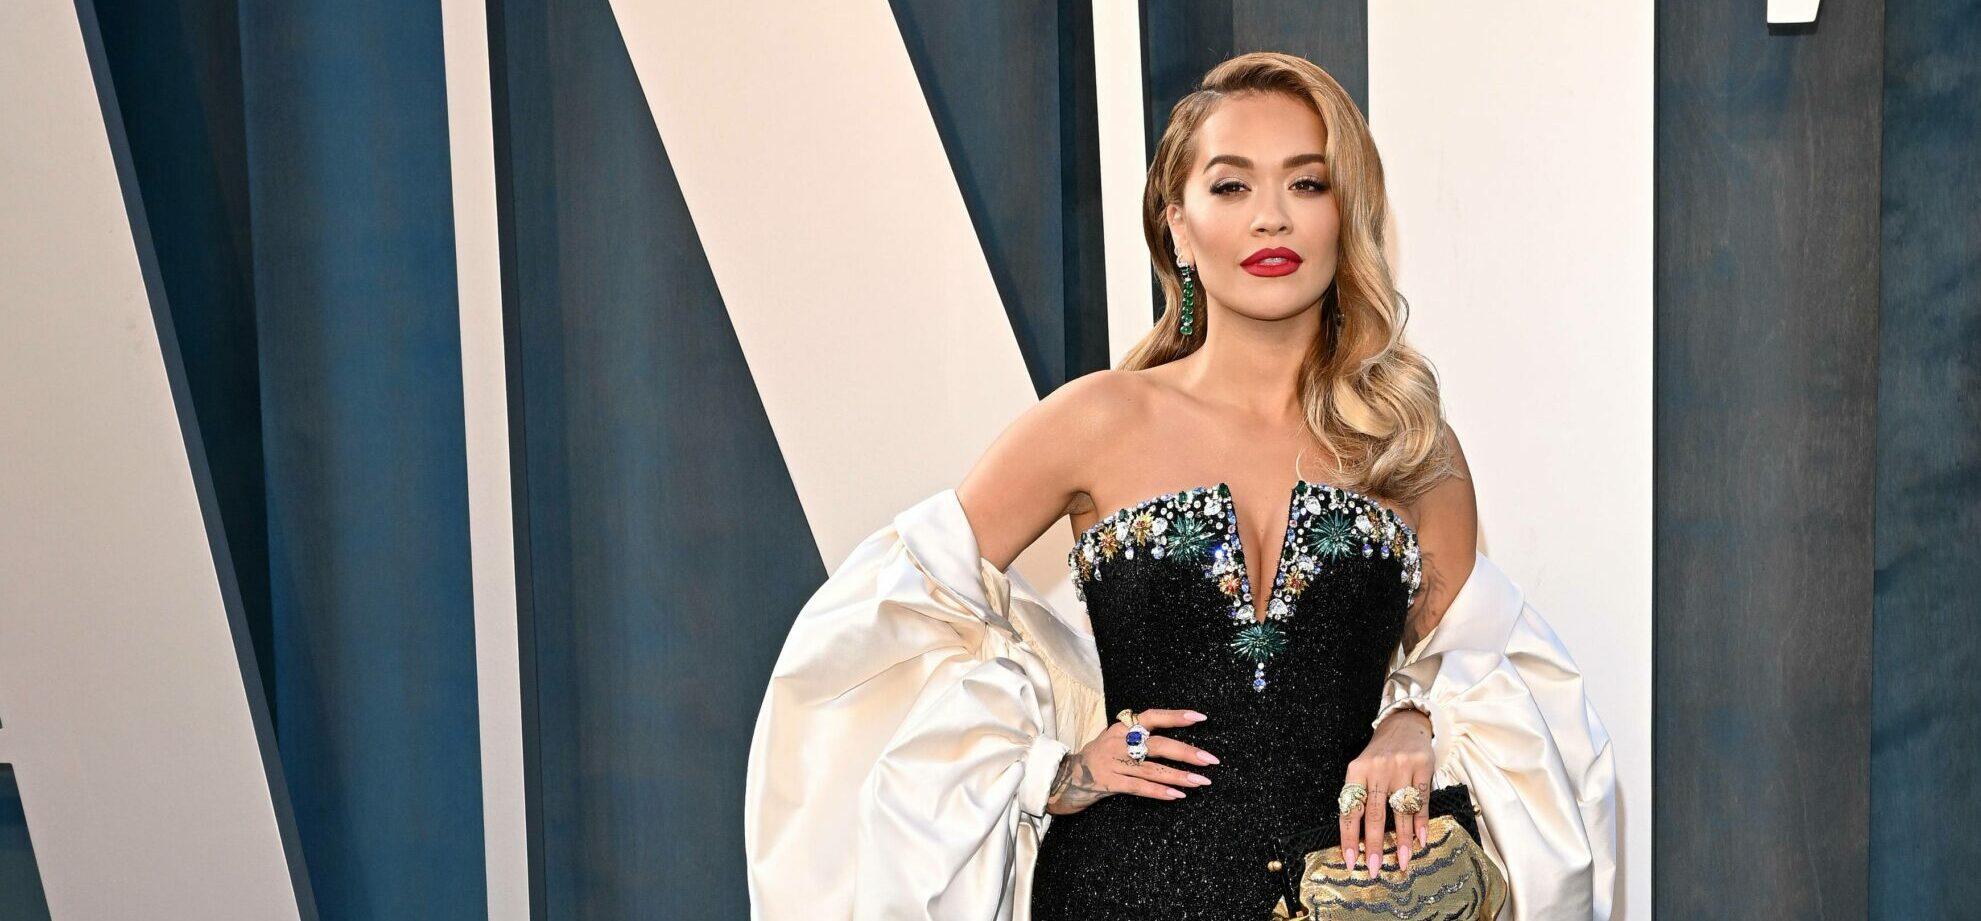 Rita Ora Leaves Little To The Imagination In Black Sheer Dress